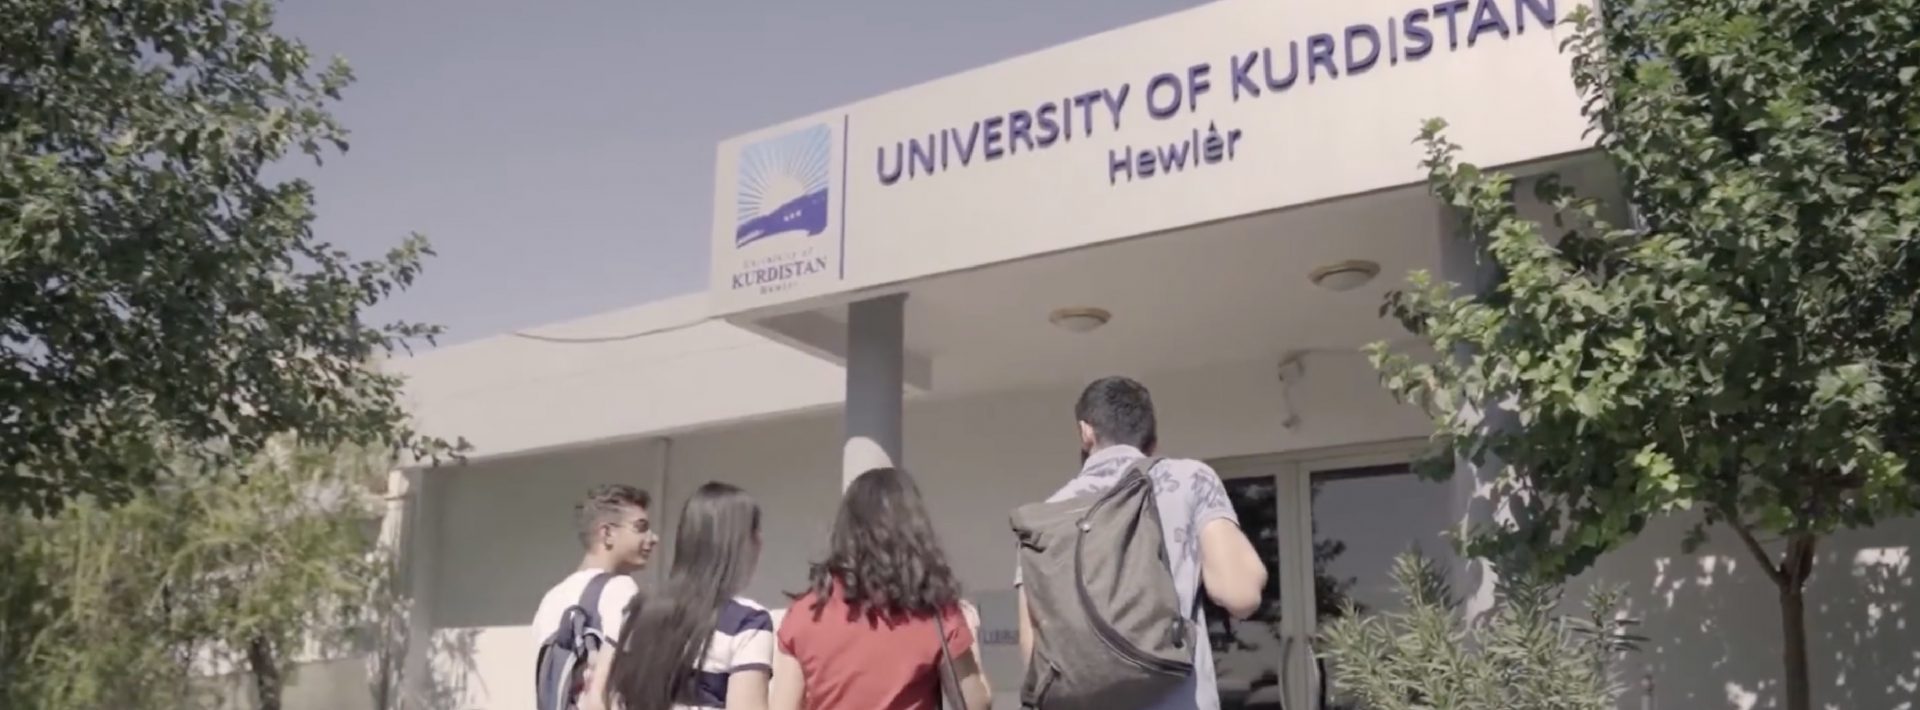 University of Kurdistan Hewlêr